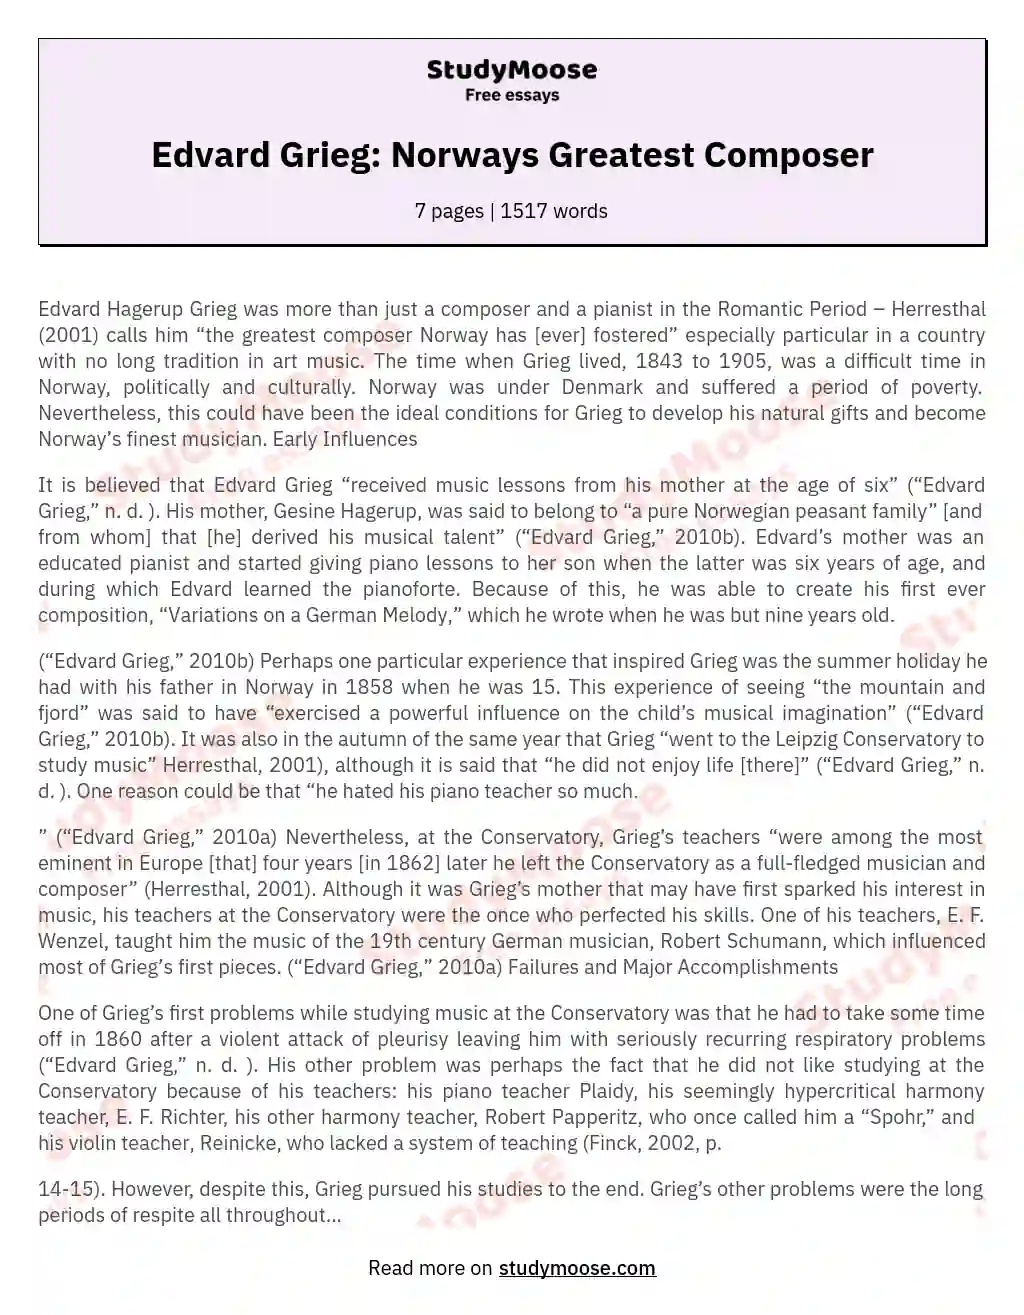 Edvard Grieg: Norways Greatest Composer essay